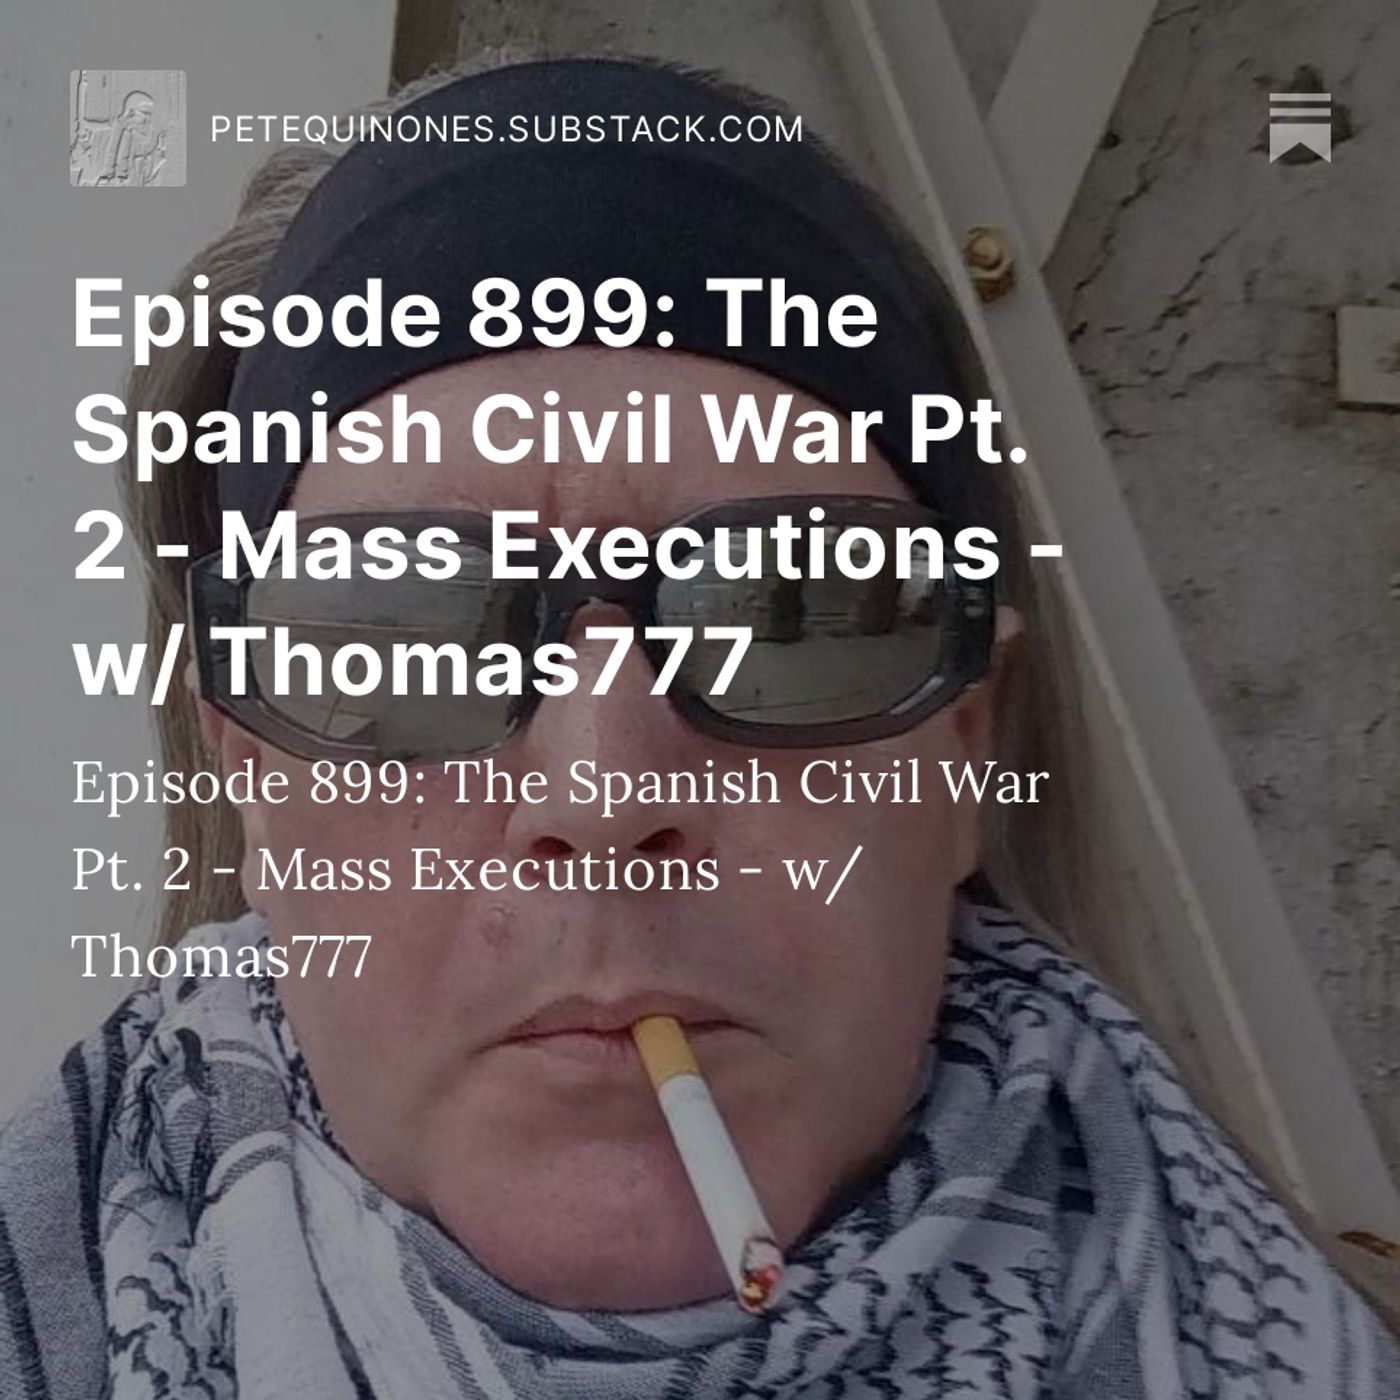 Episode 899: The Spanish Civil War Pt. 2 - Mass Executions - w/ Thomas777